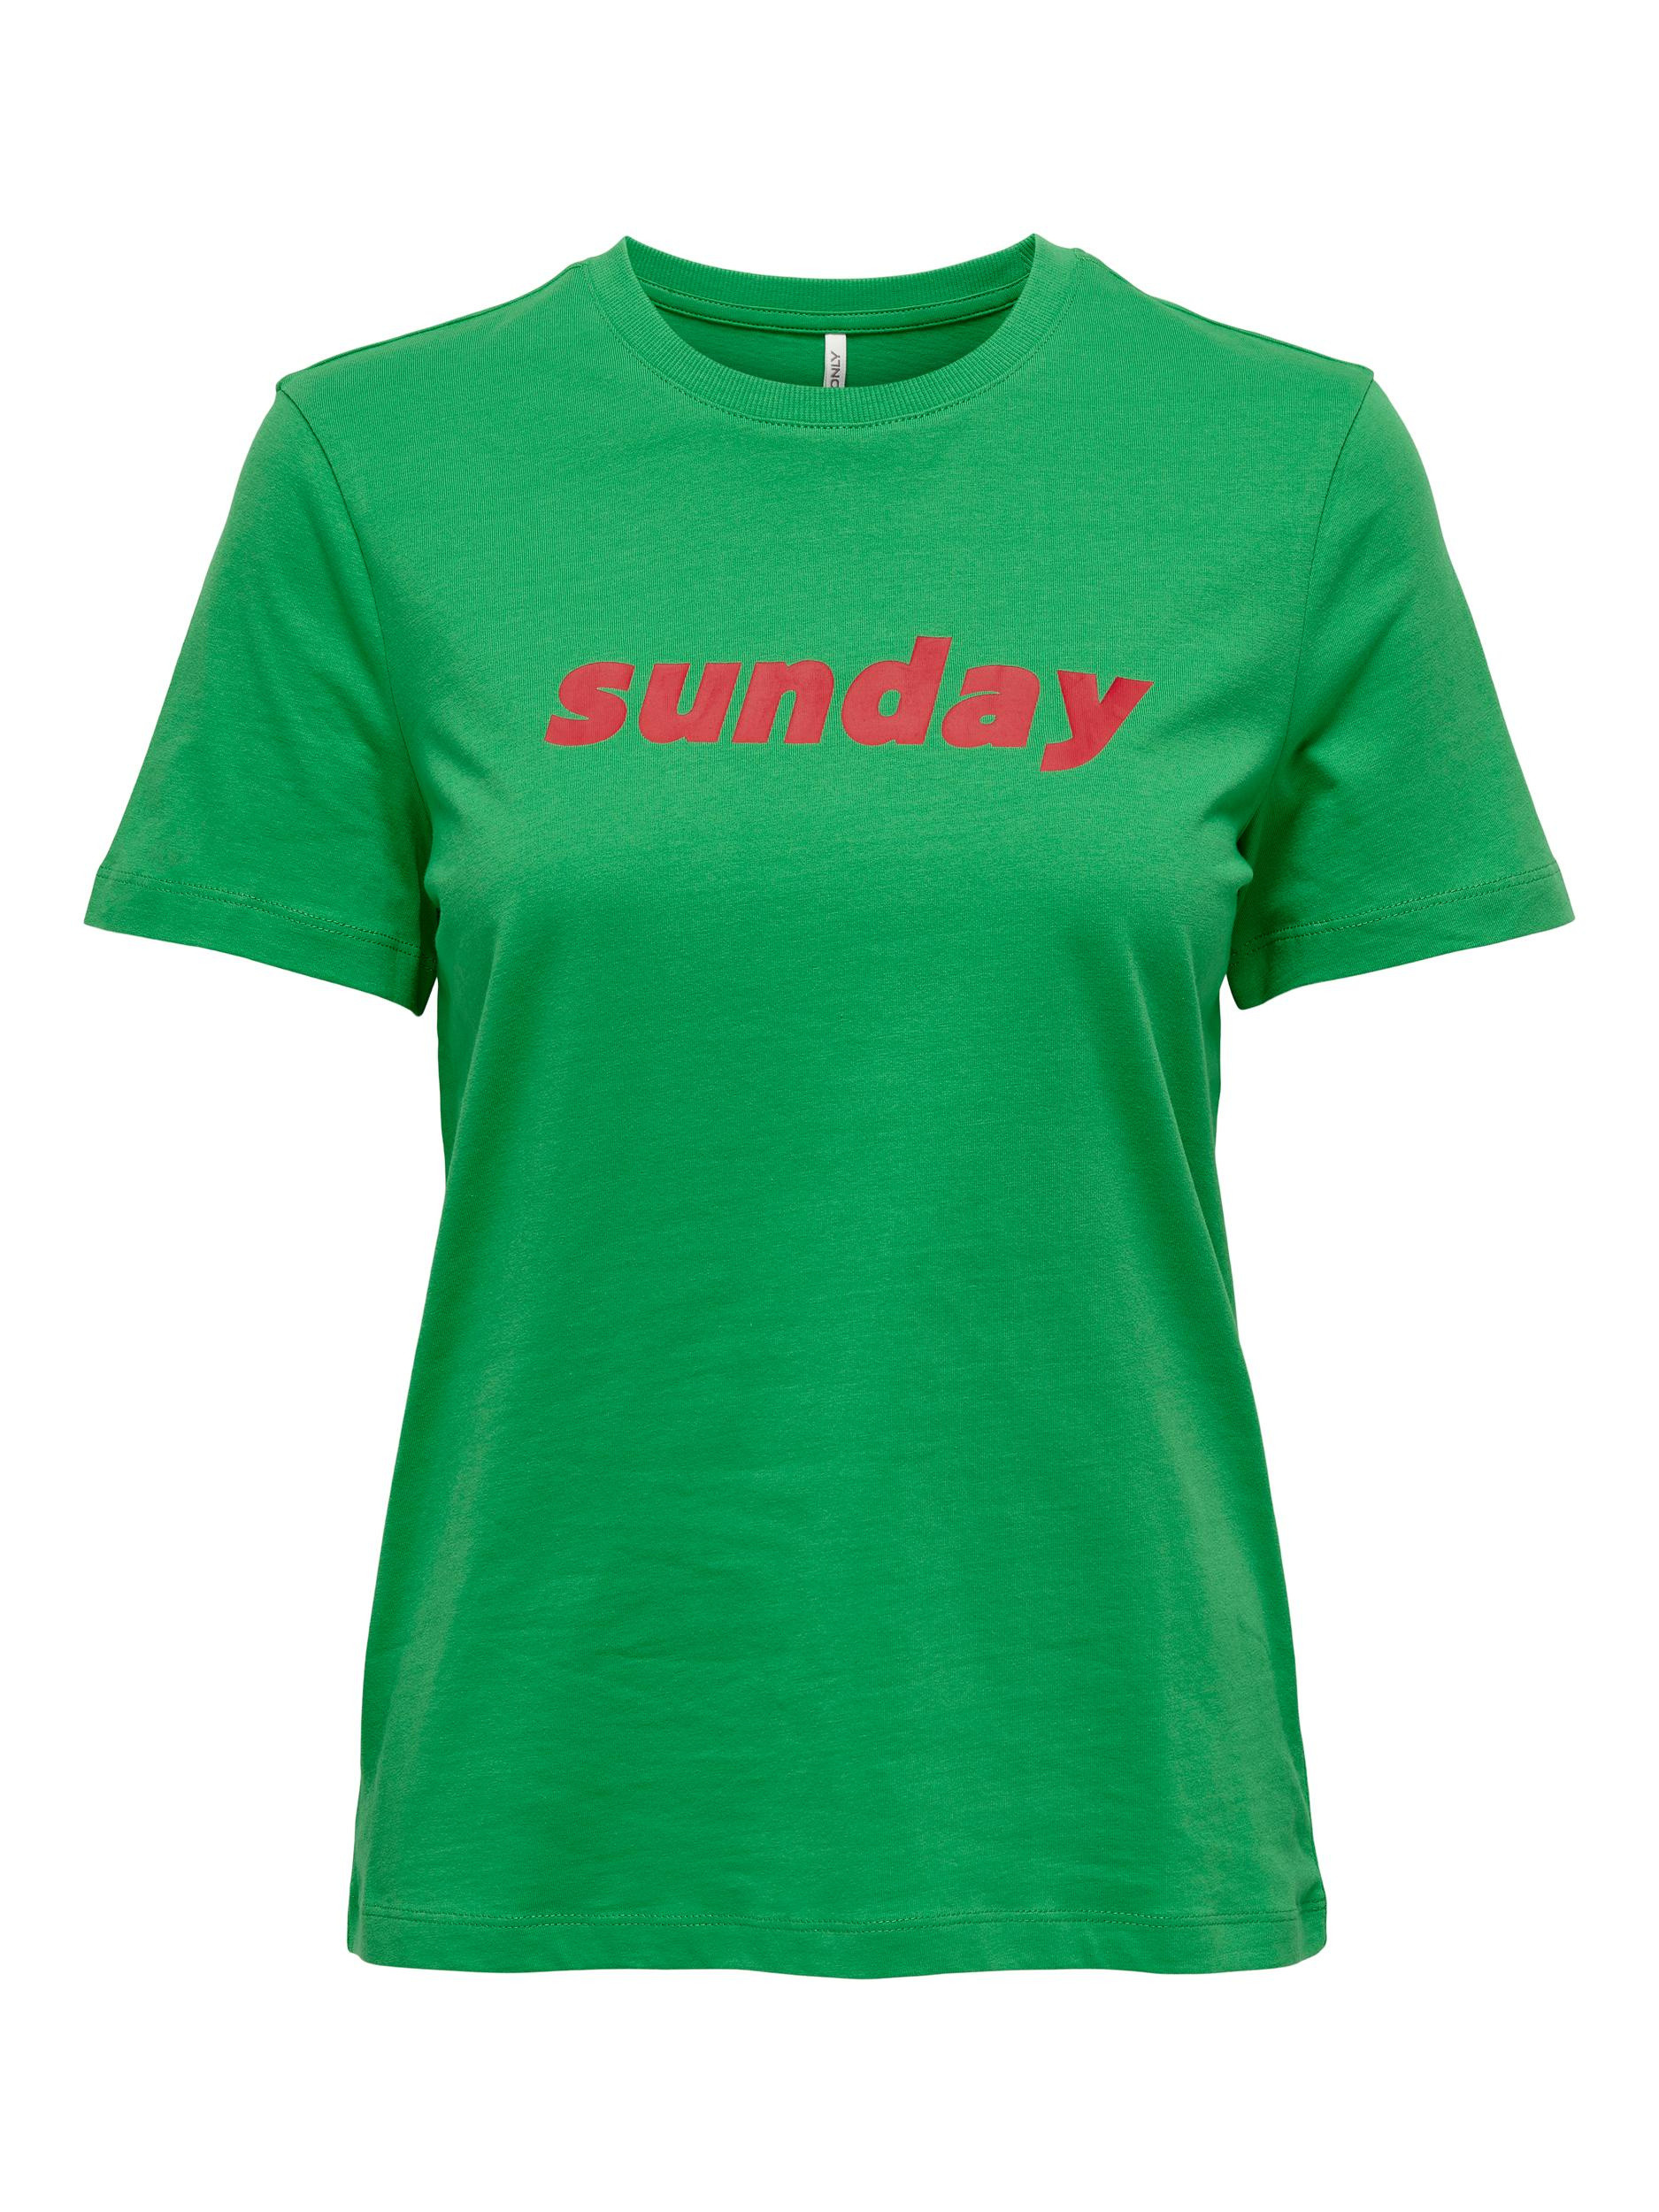 Only - T-shirt regular fit con stampa, Verde, large image number 0